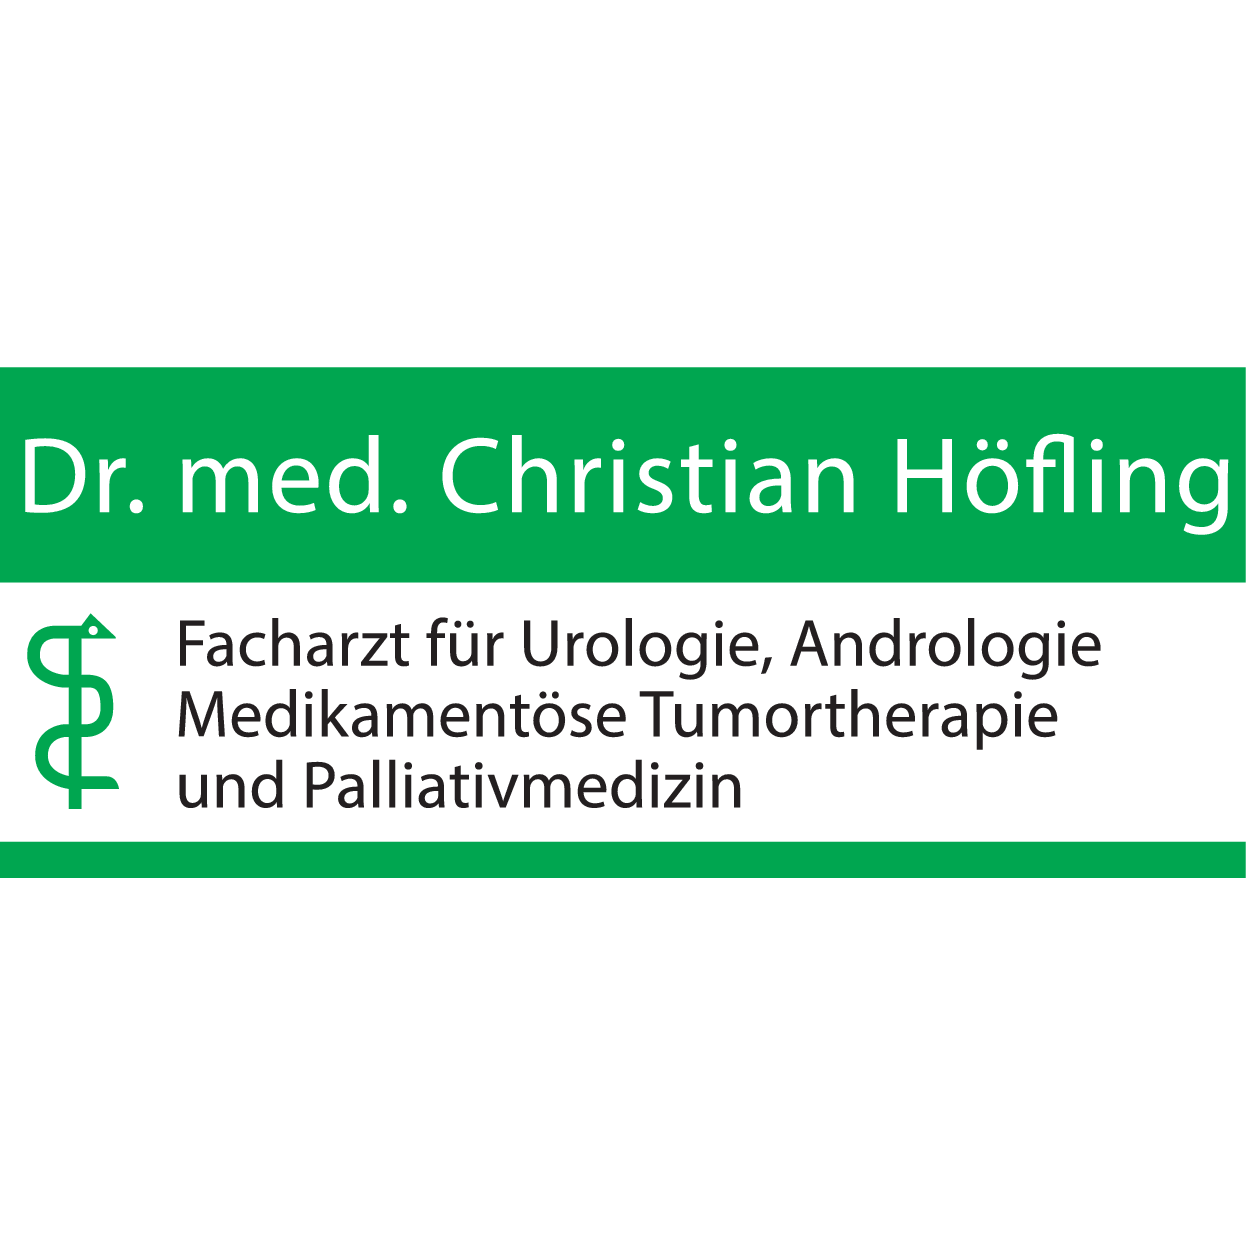 Dr. med. Christian Höfling